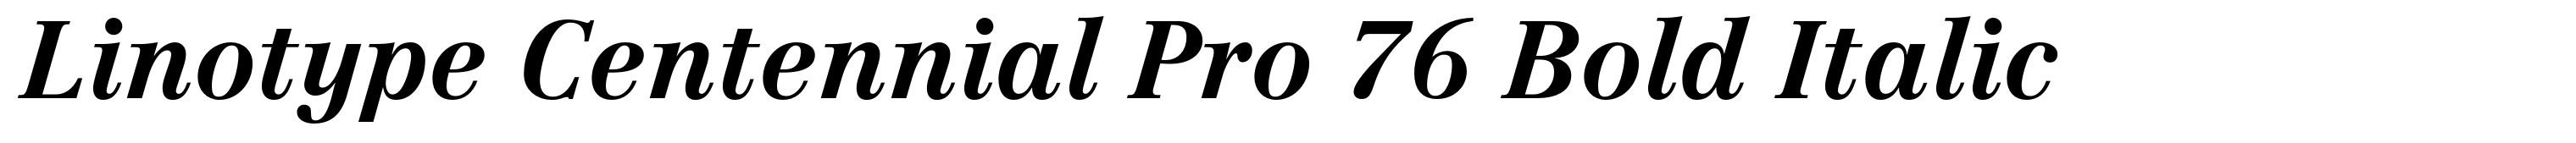 Linotype Centennial Pro 76 Bold Italic